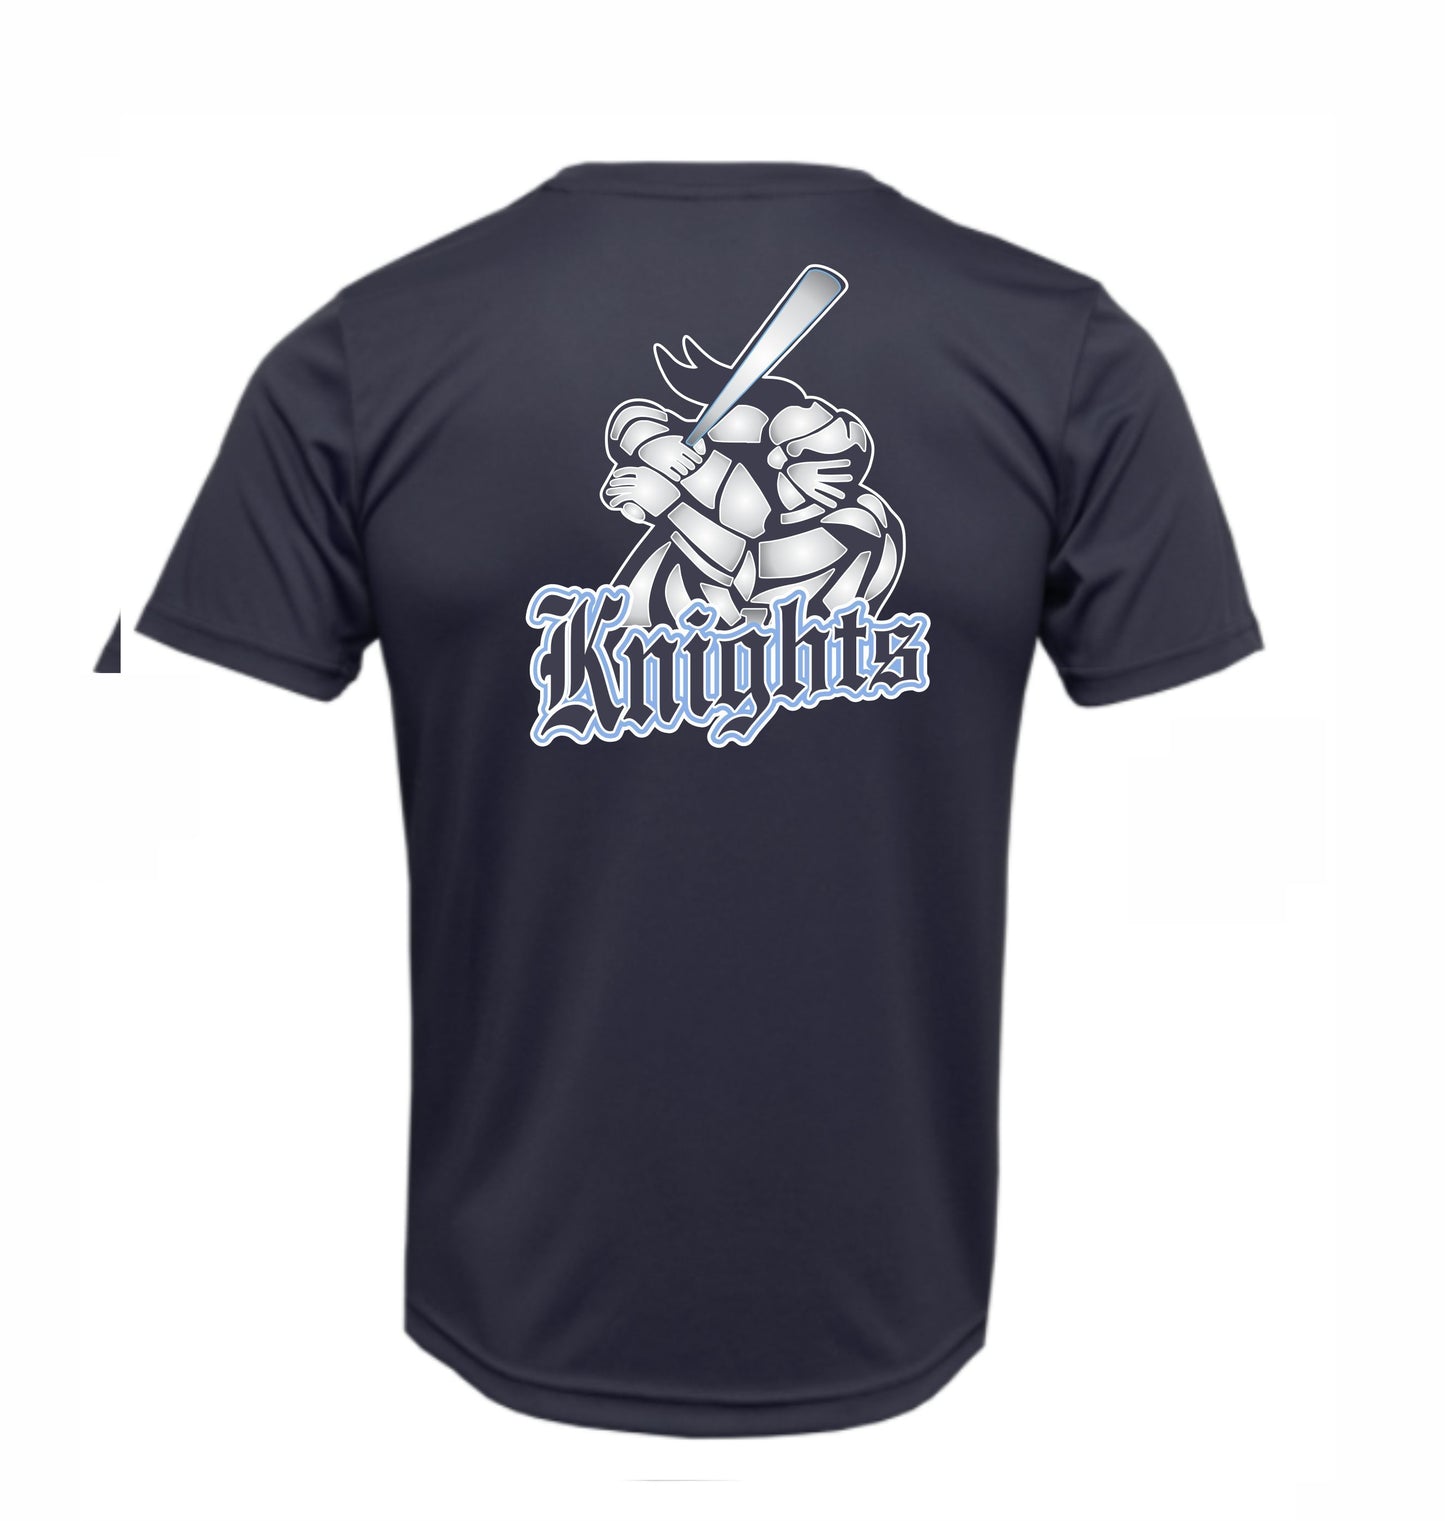 Knights Cotton T-shirt w/ full logo